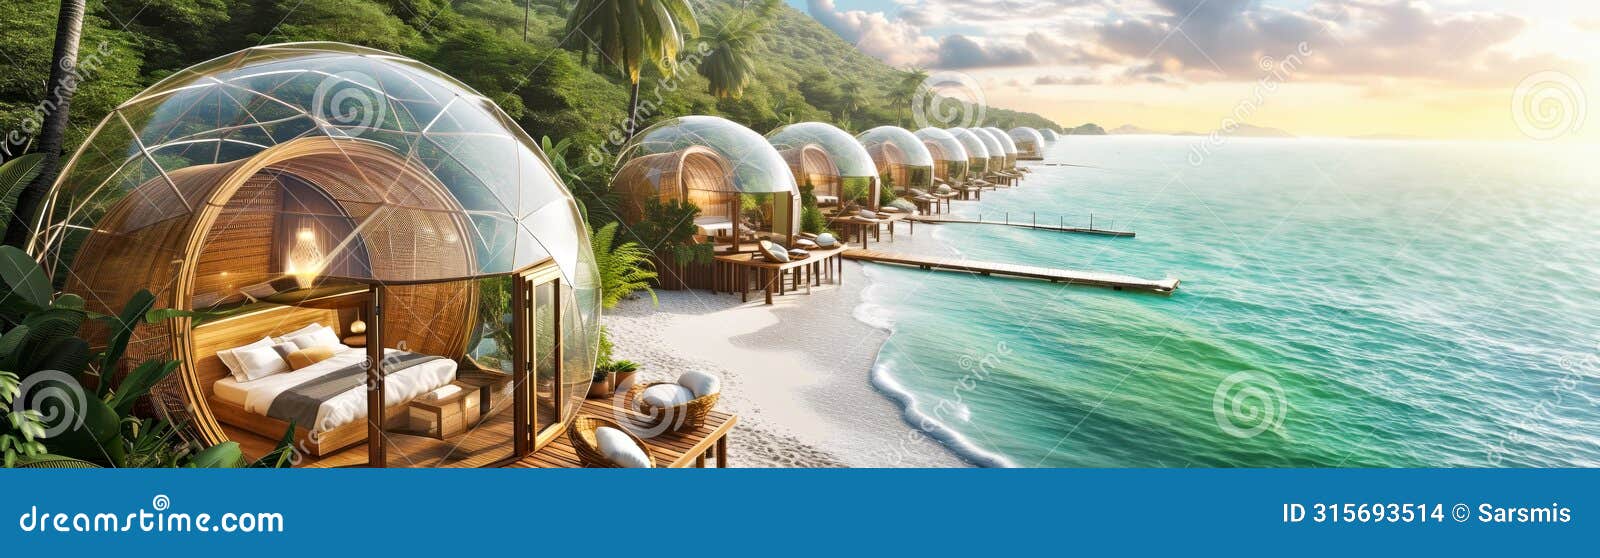 tropical beachfront geo-domes on a beachfront. eco-friendly igloo hotel